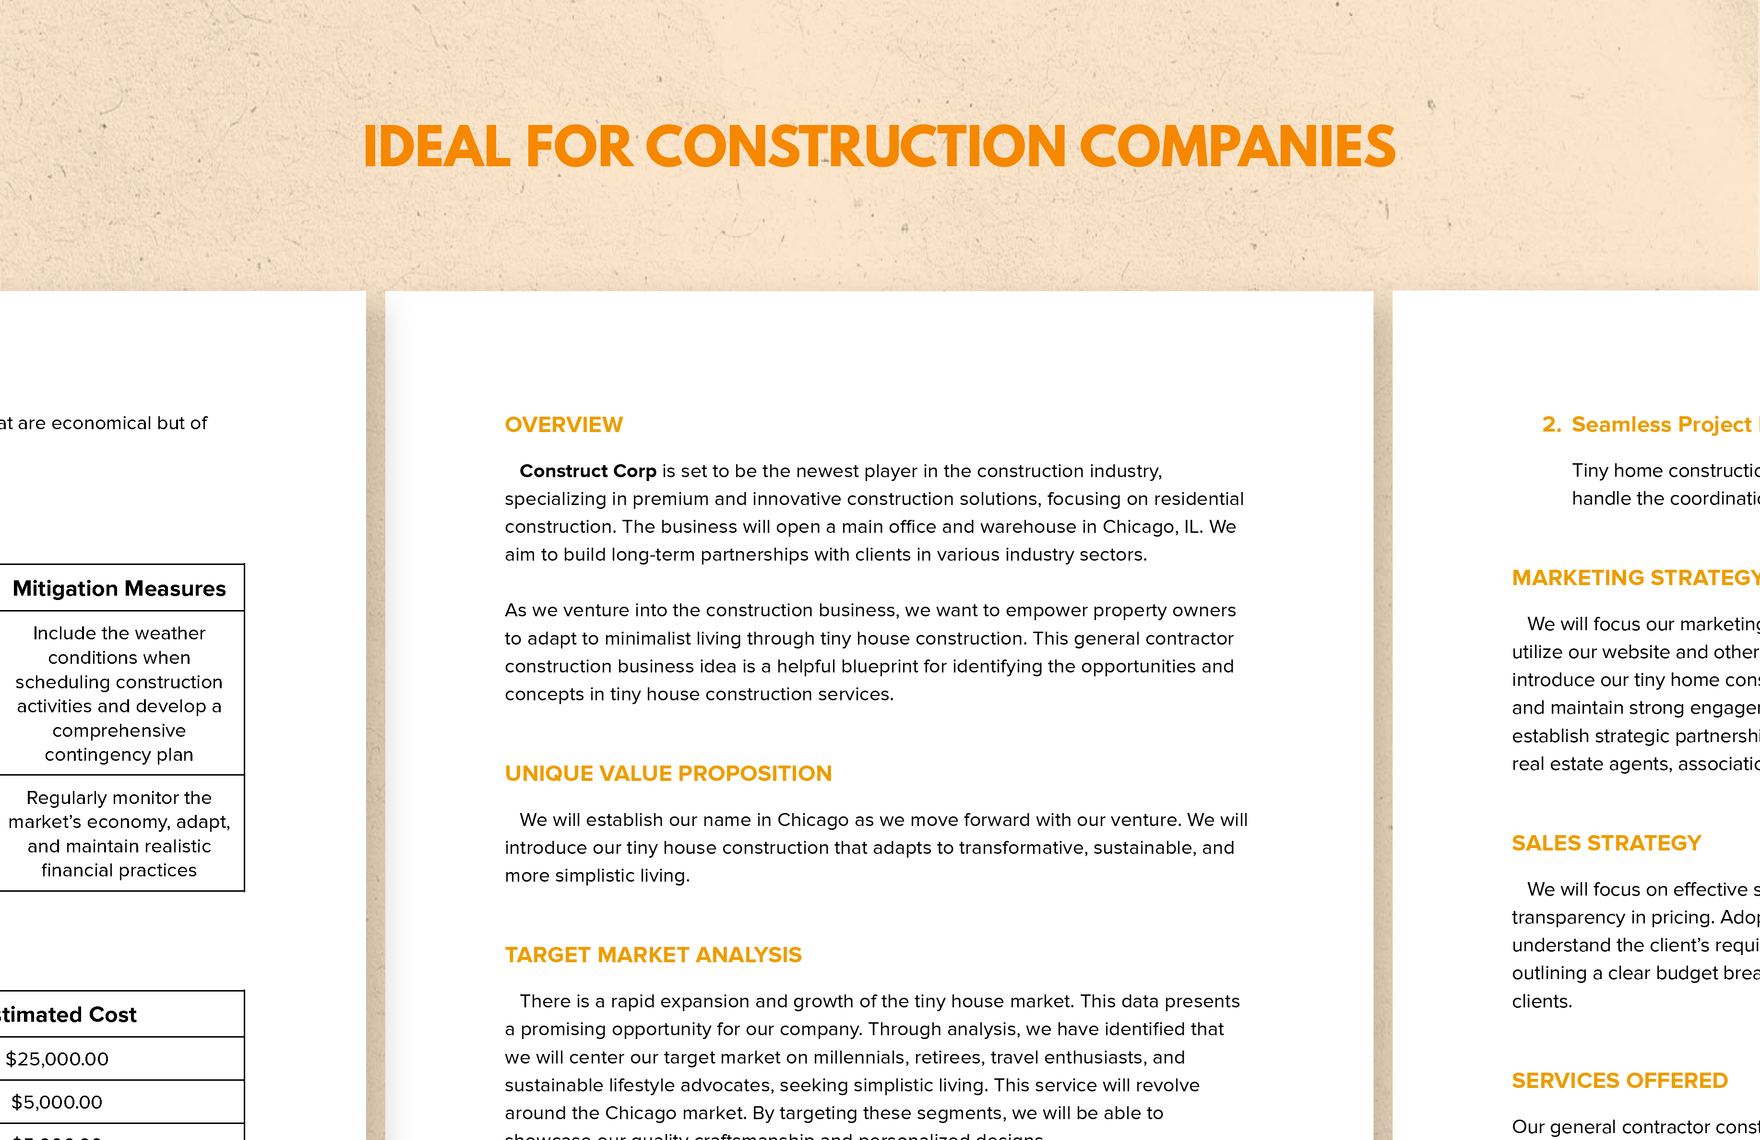 General Contractor Construction Business Idea